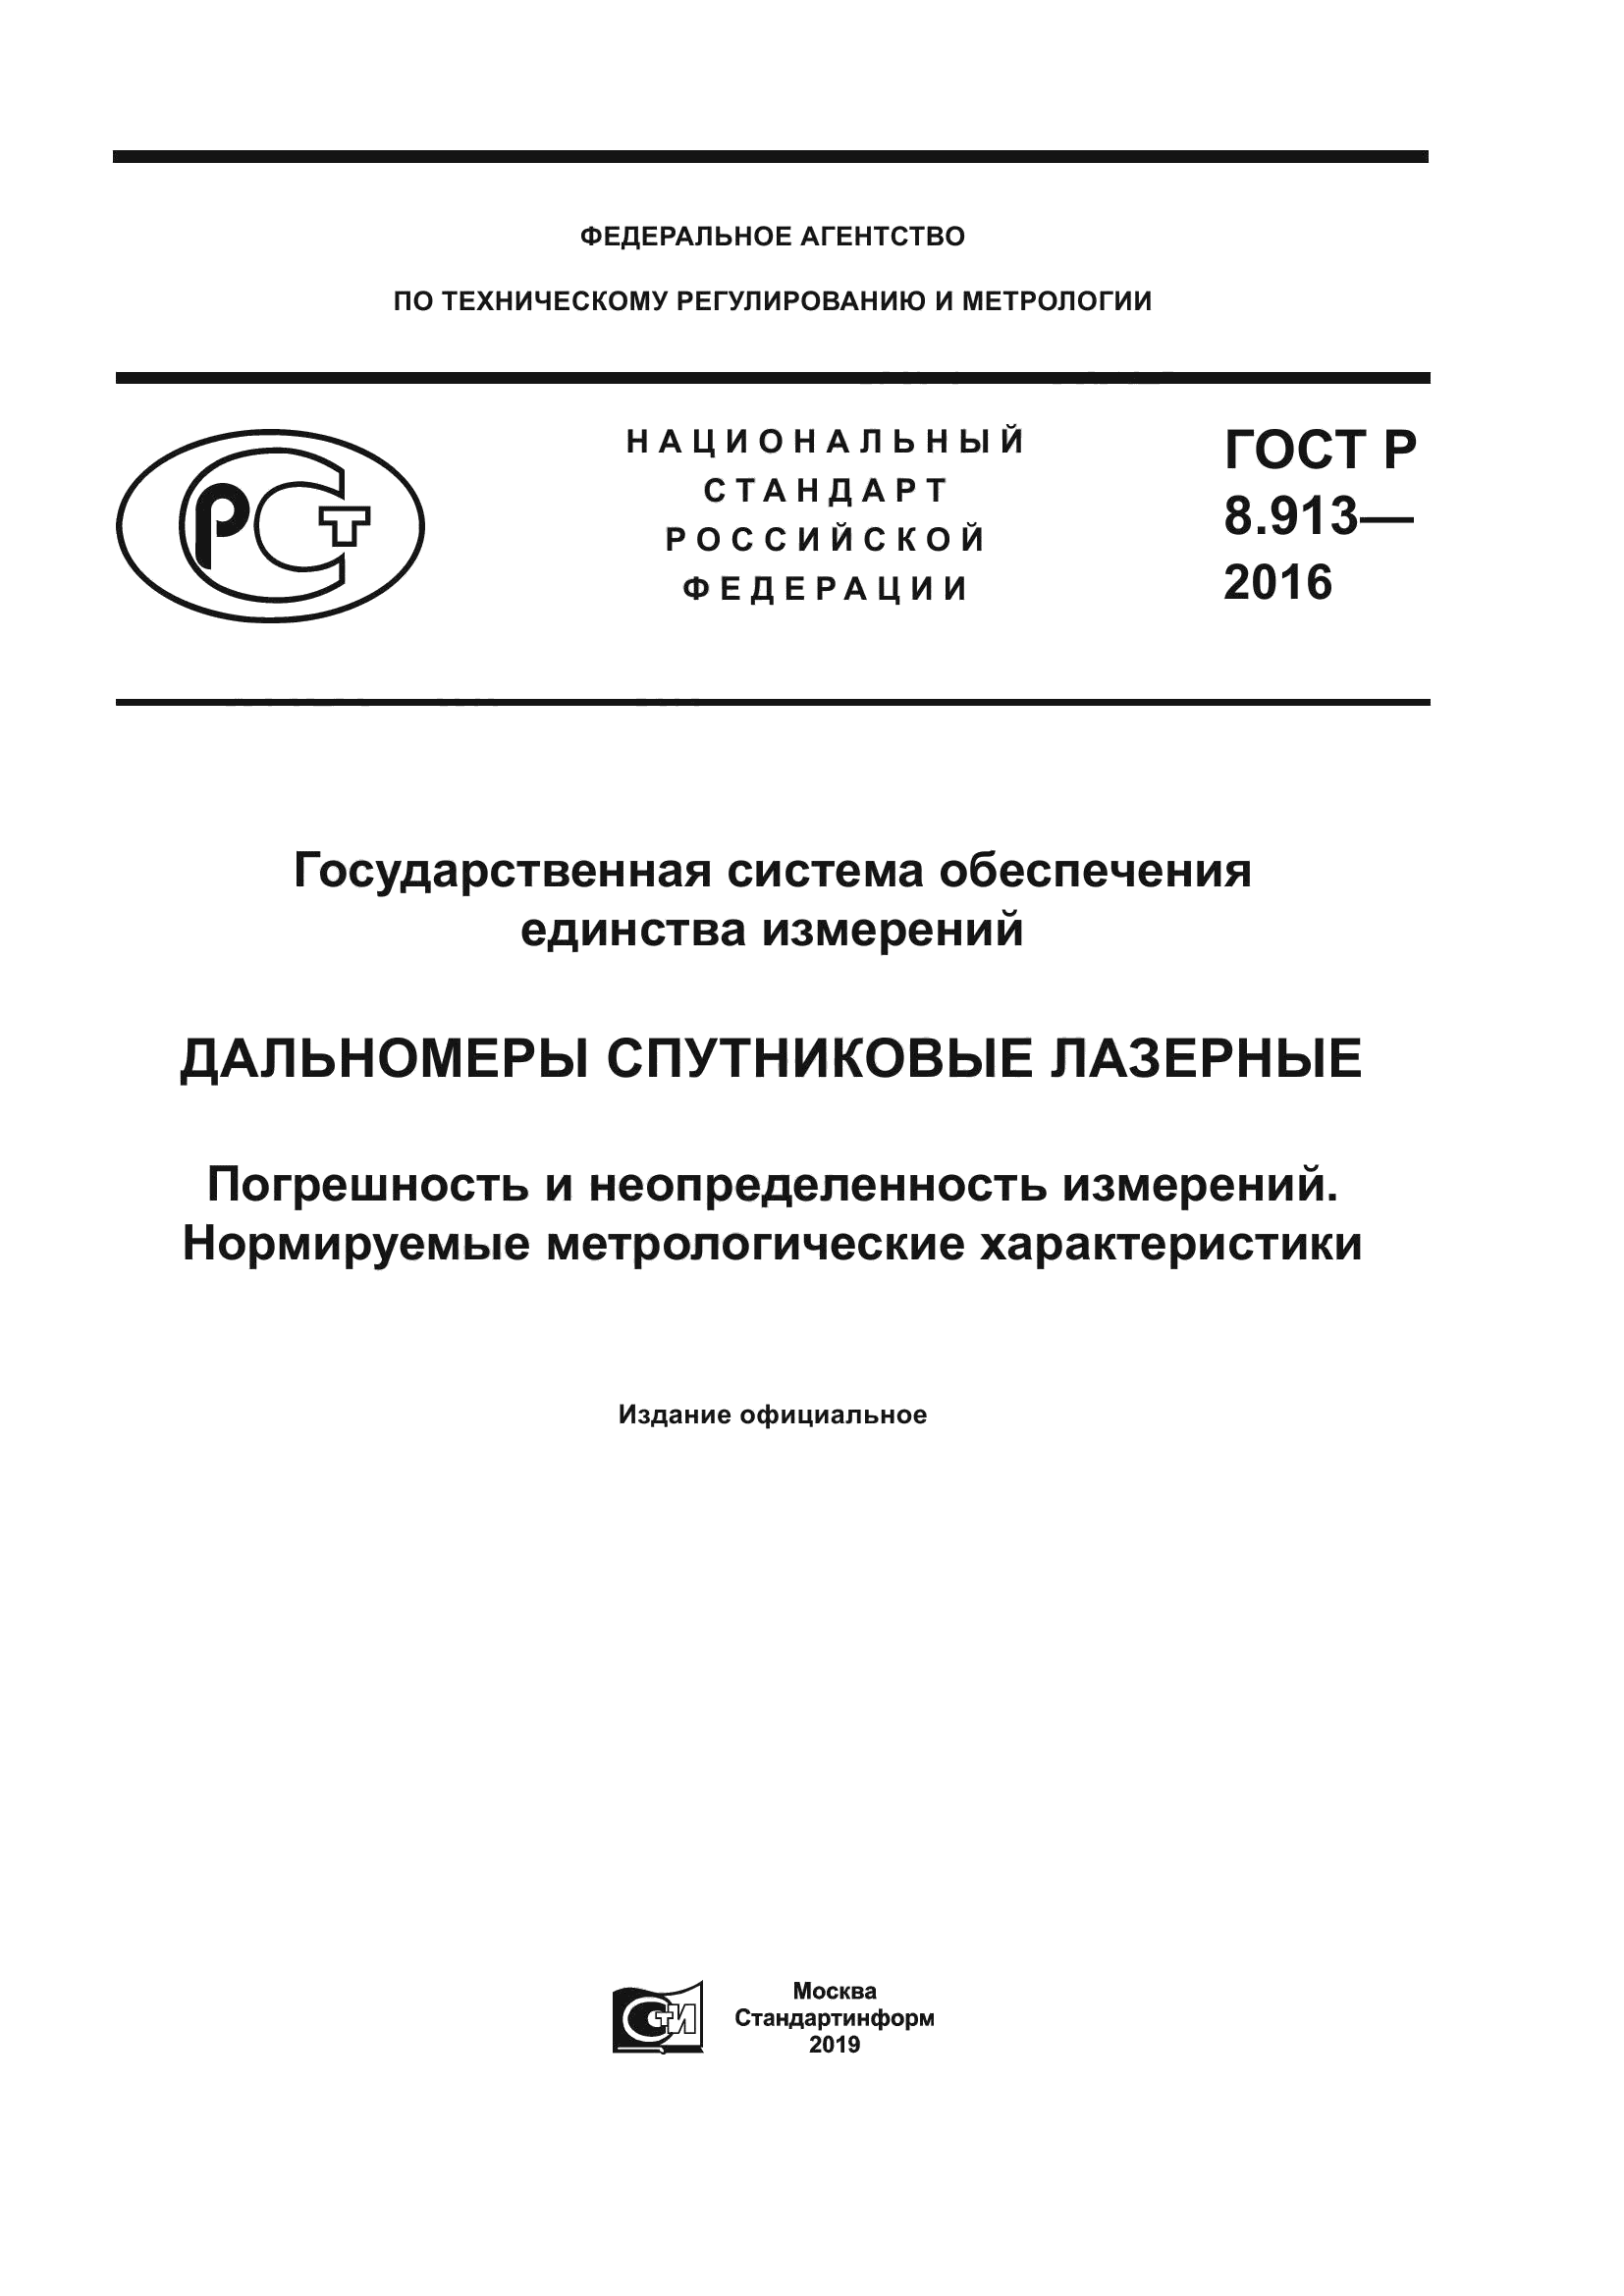 ГОСТ Р 8.913-2016